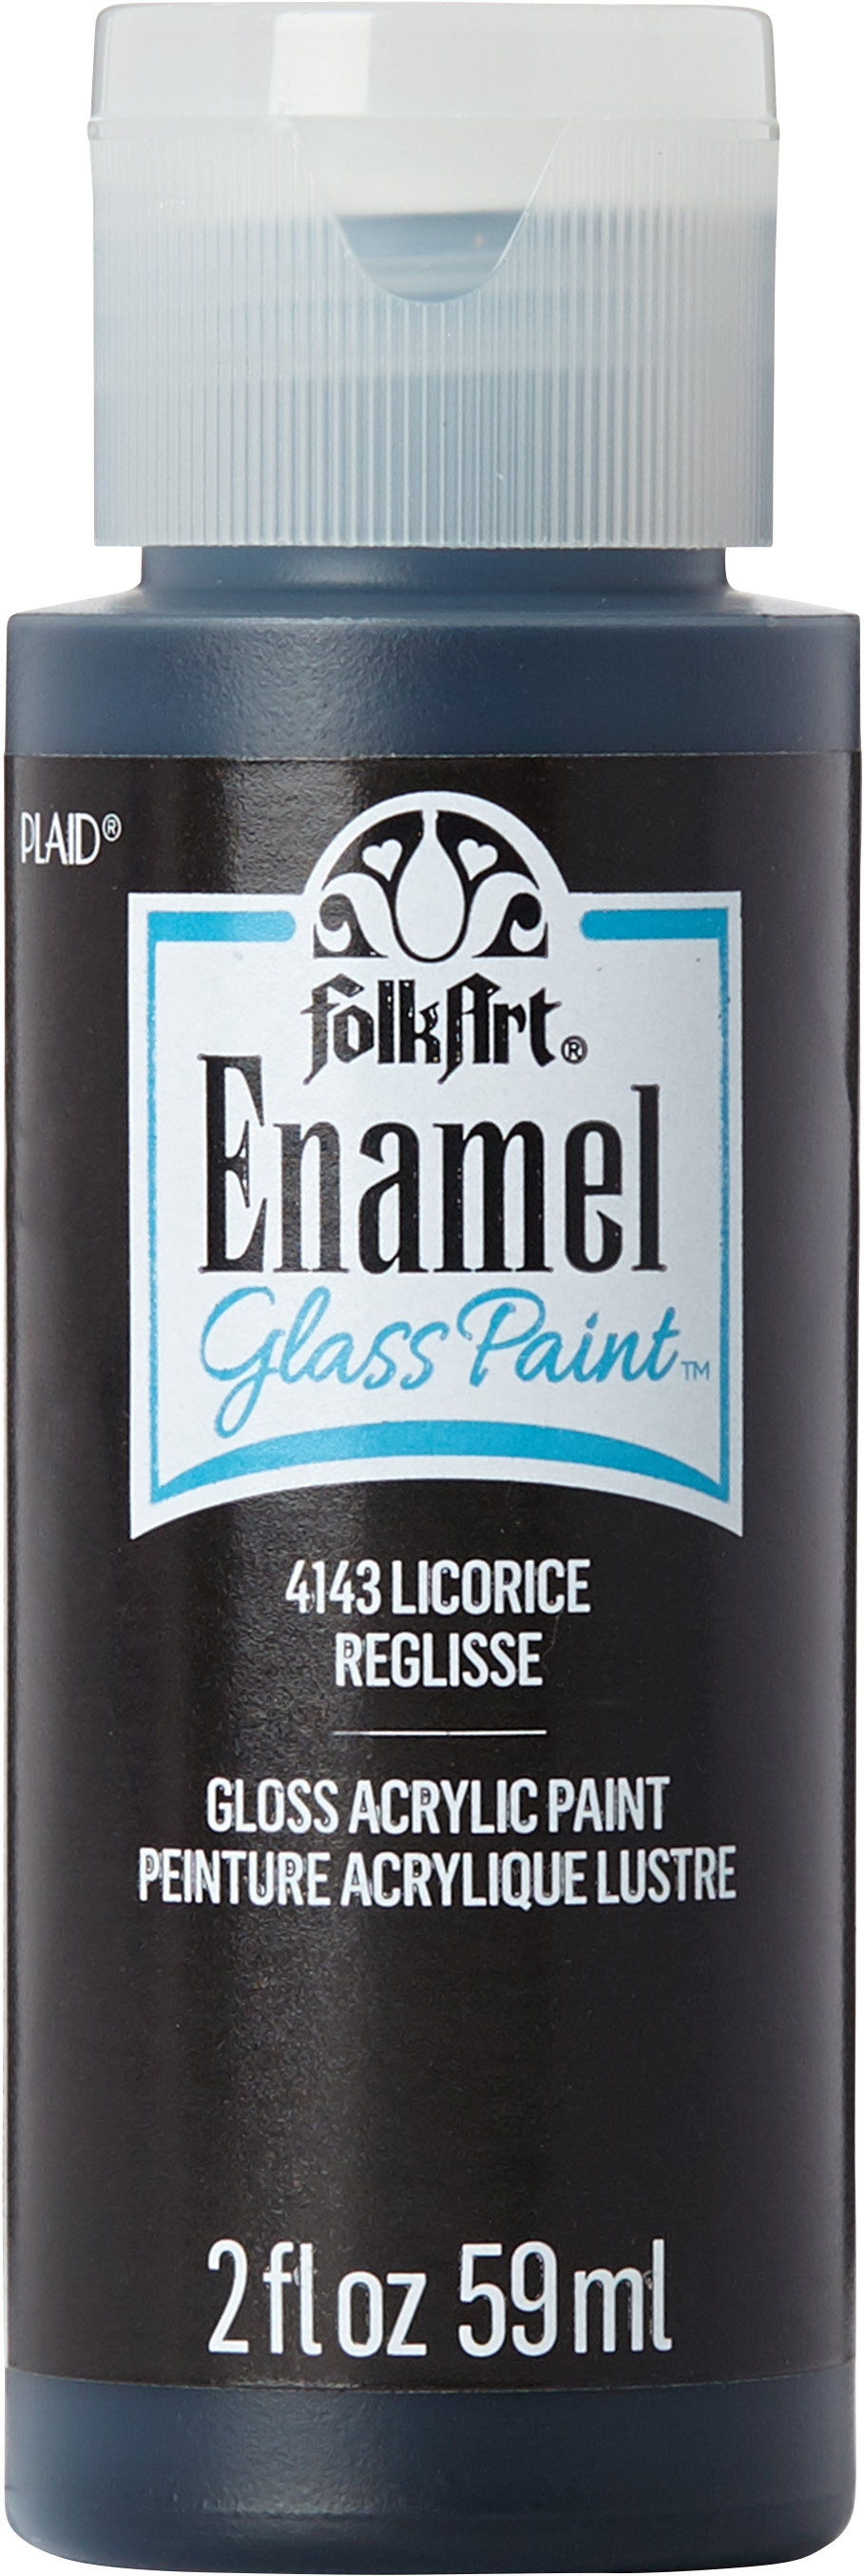 FolkArt Enamel Acrylic Craft Paint, Gloss Finish, Licorice, 2 fl